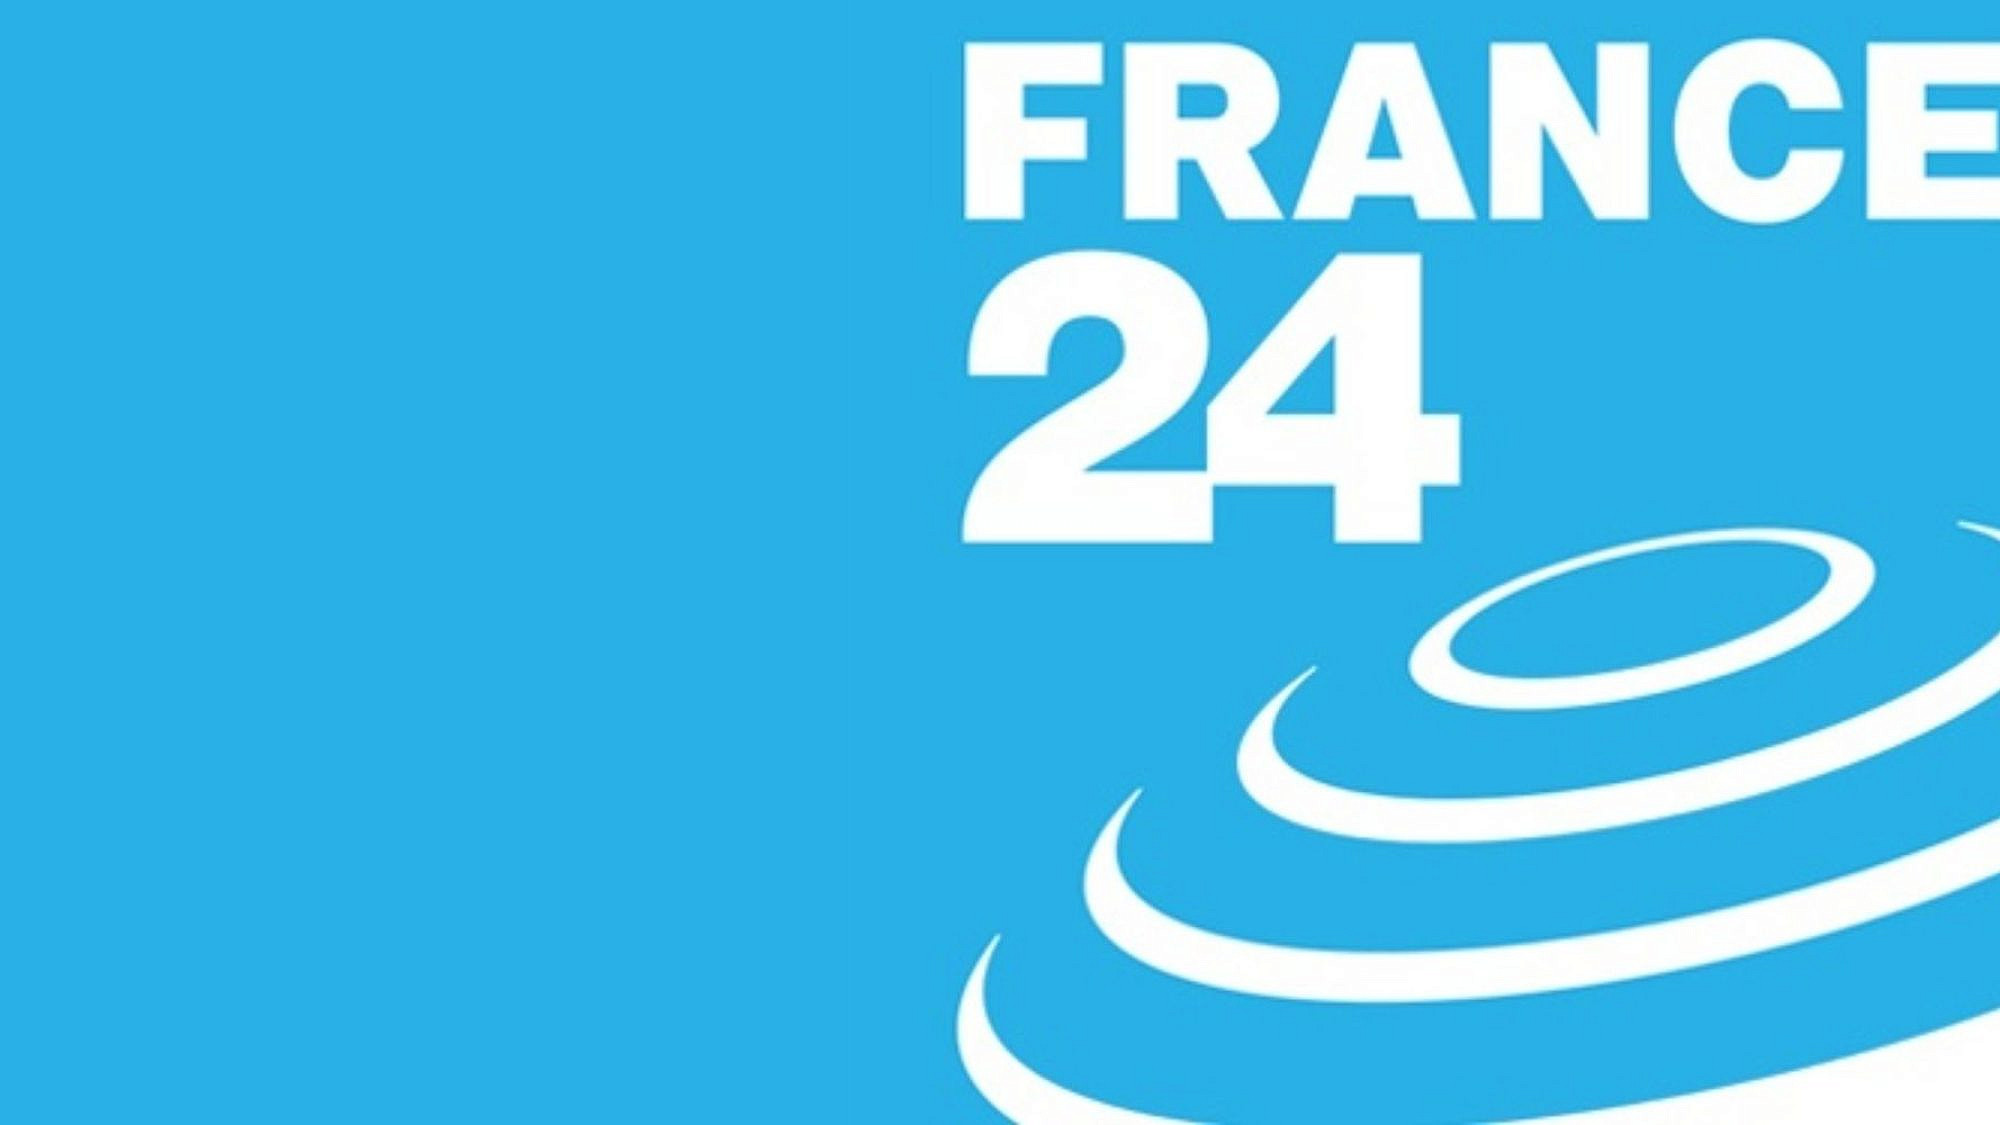 The France24 logo. Source: Screenshot.